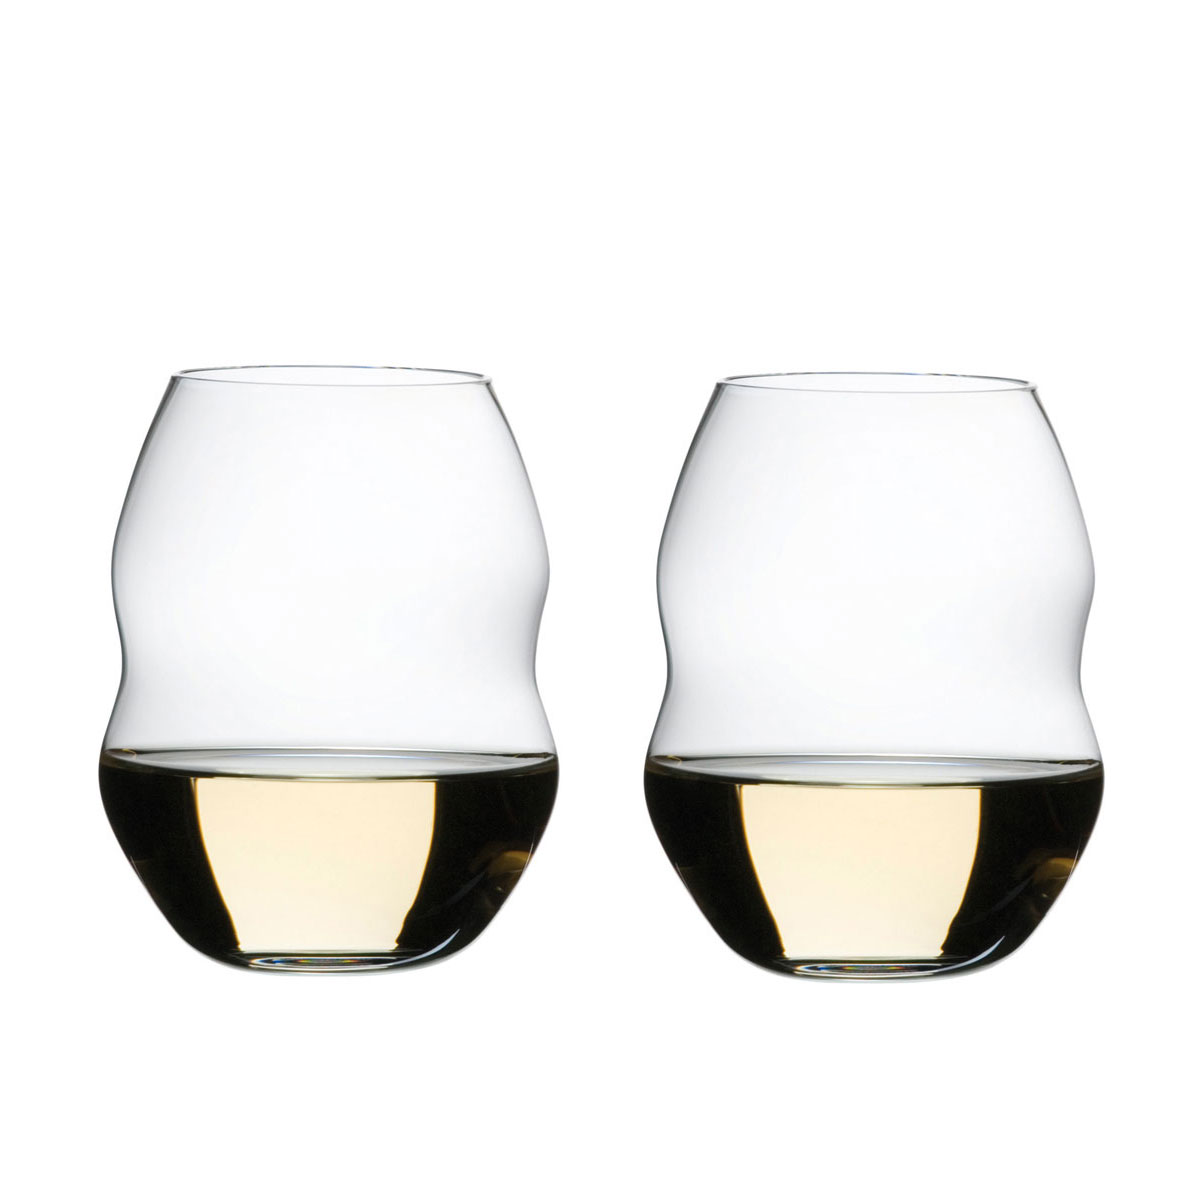 Riedel Swirl, White Wine Glasses Wine Glasses, Pair